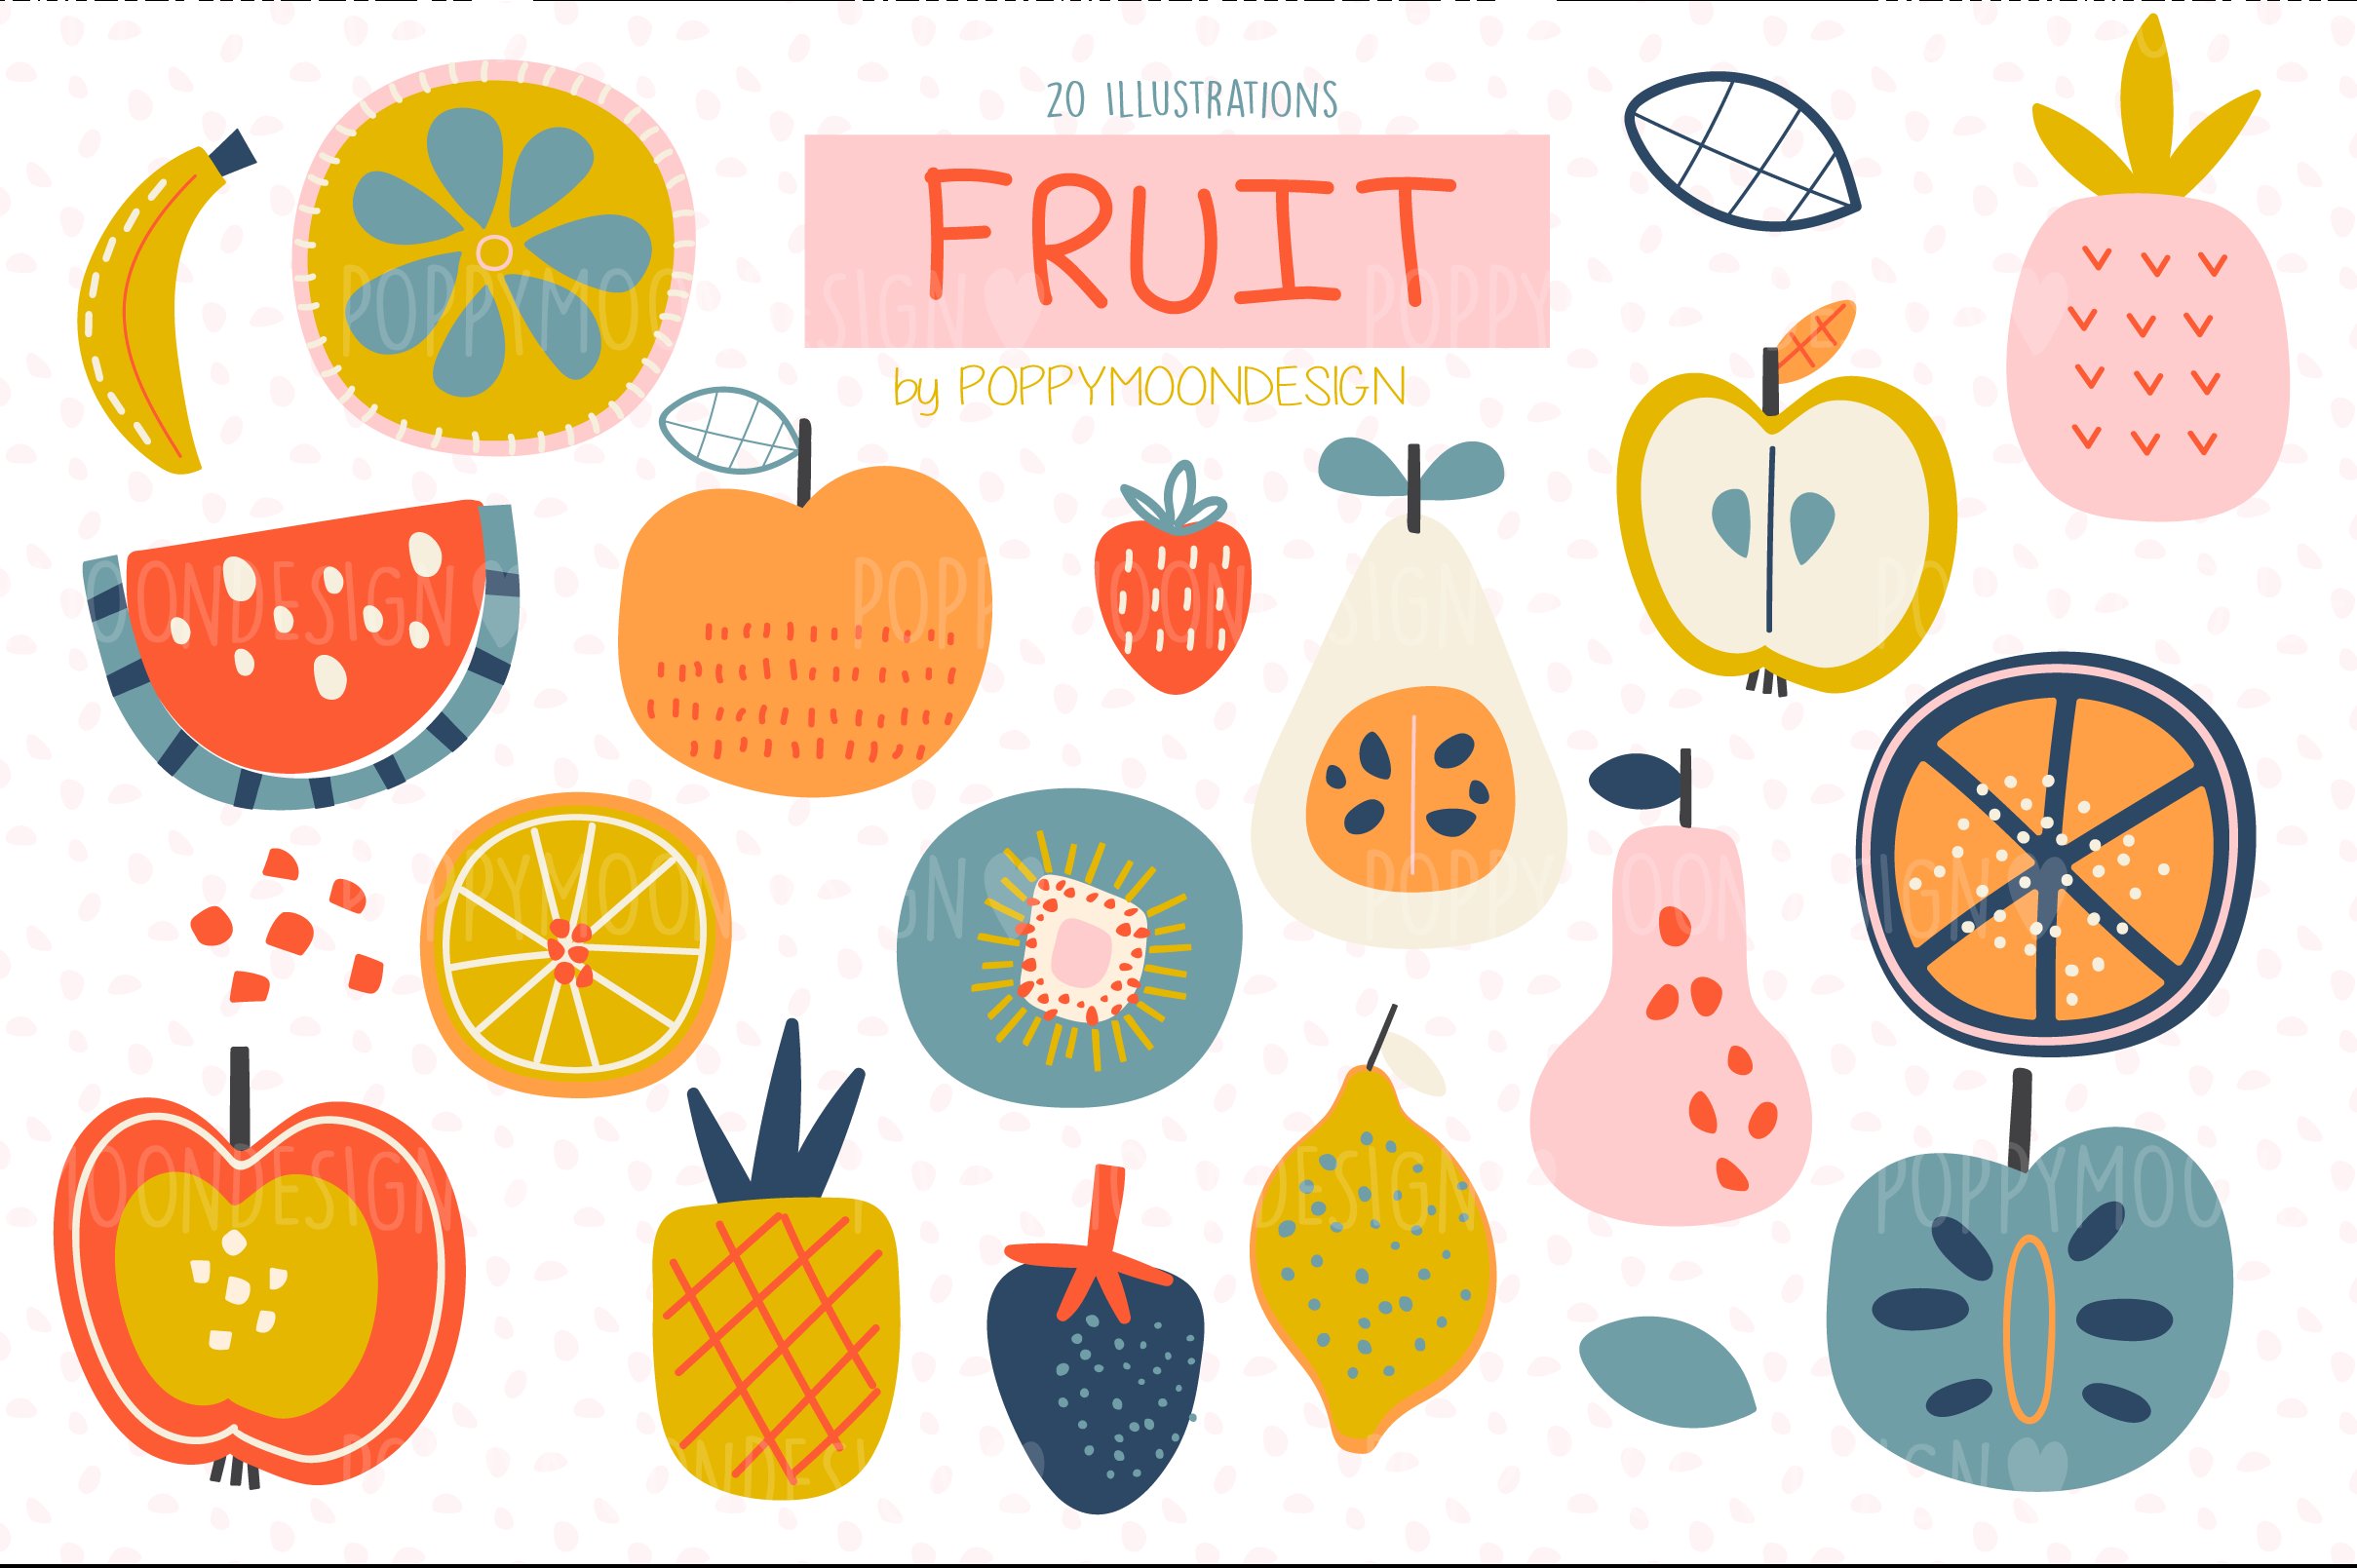 Fruit clipart set cover image.